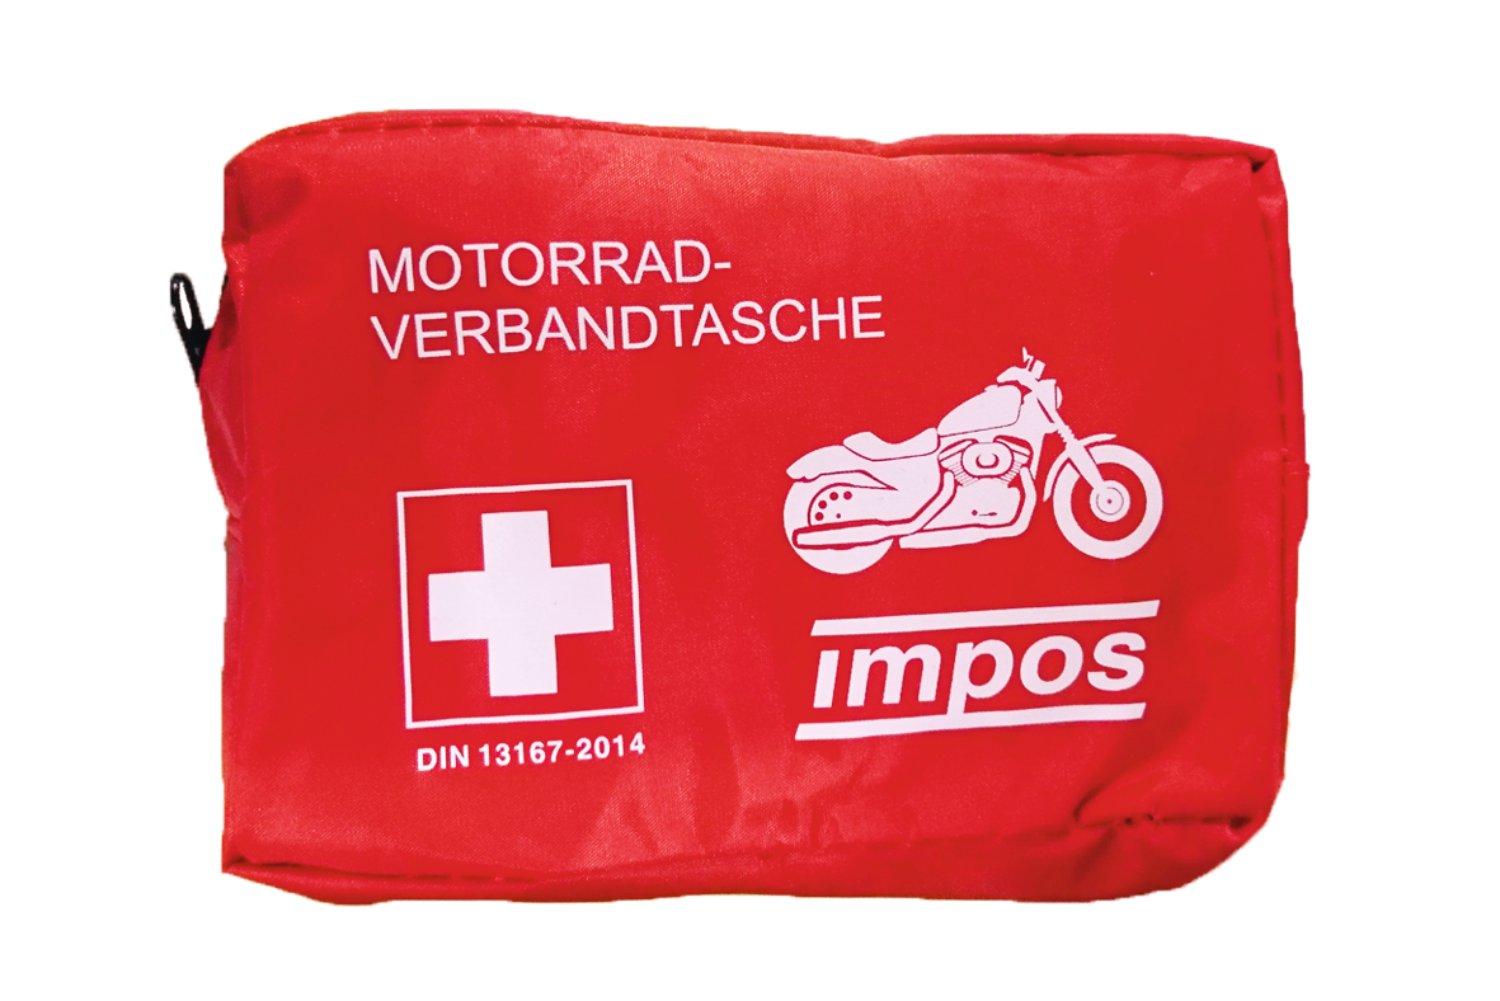 Motorrad-Verbandtasche DIN 13167 